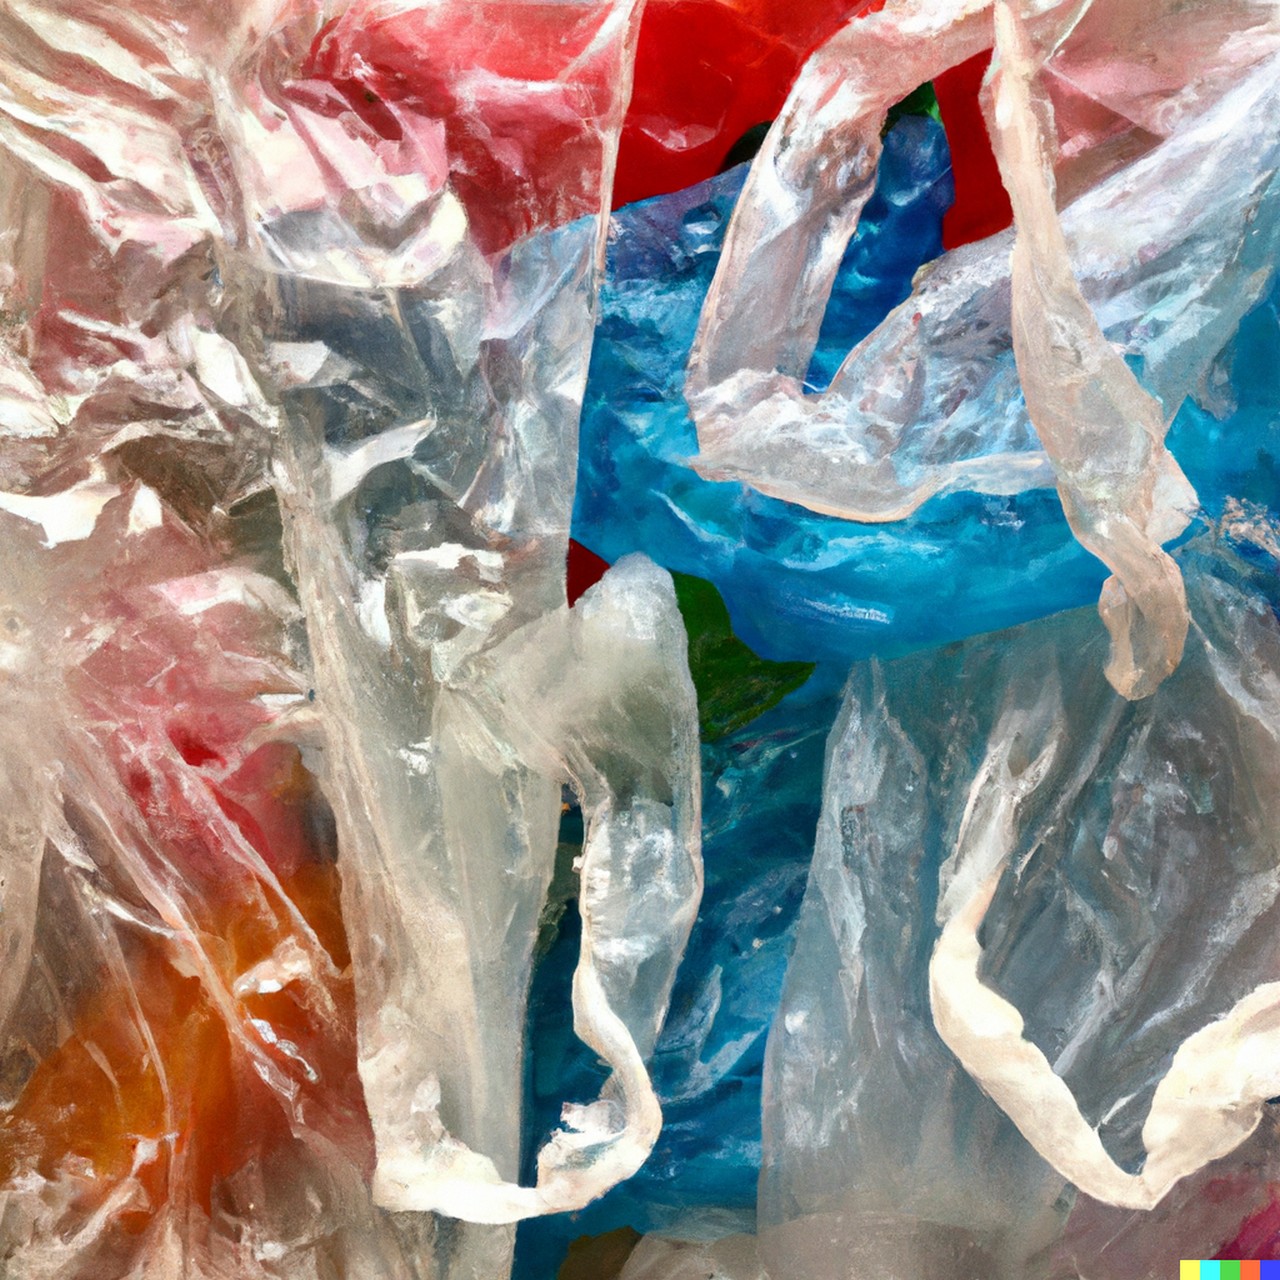 Resolving The Age-old Debate. Paper Vs Plastic Bags - envoPAP